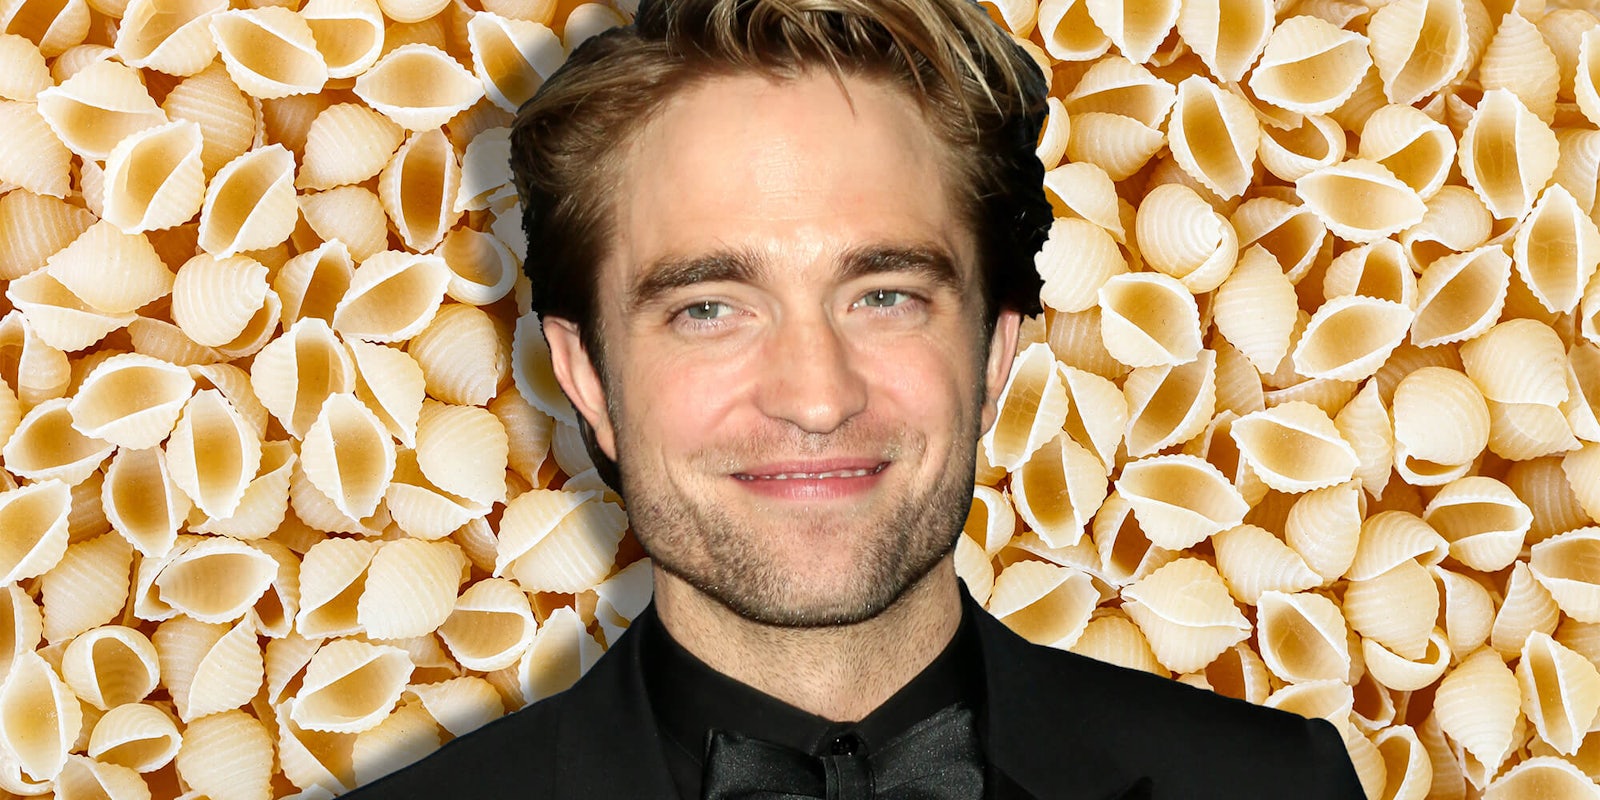 Robert Pattinson over pasta background